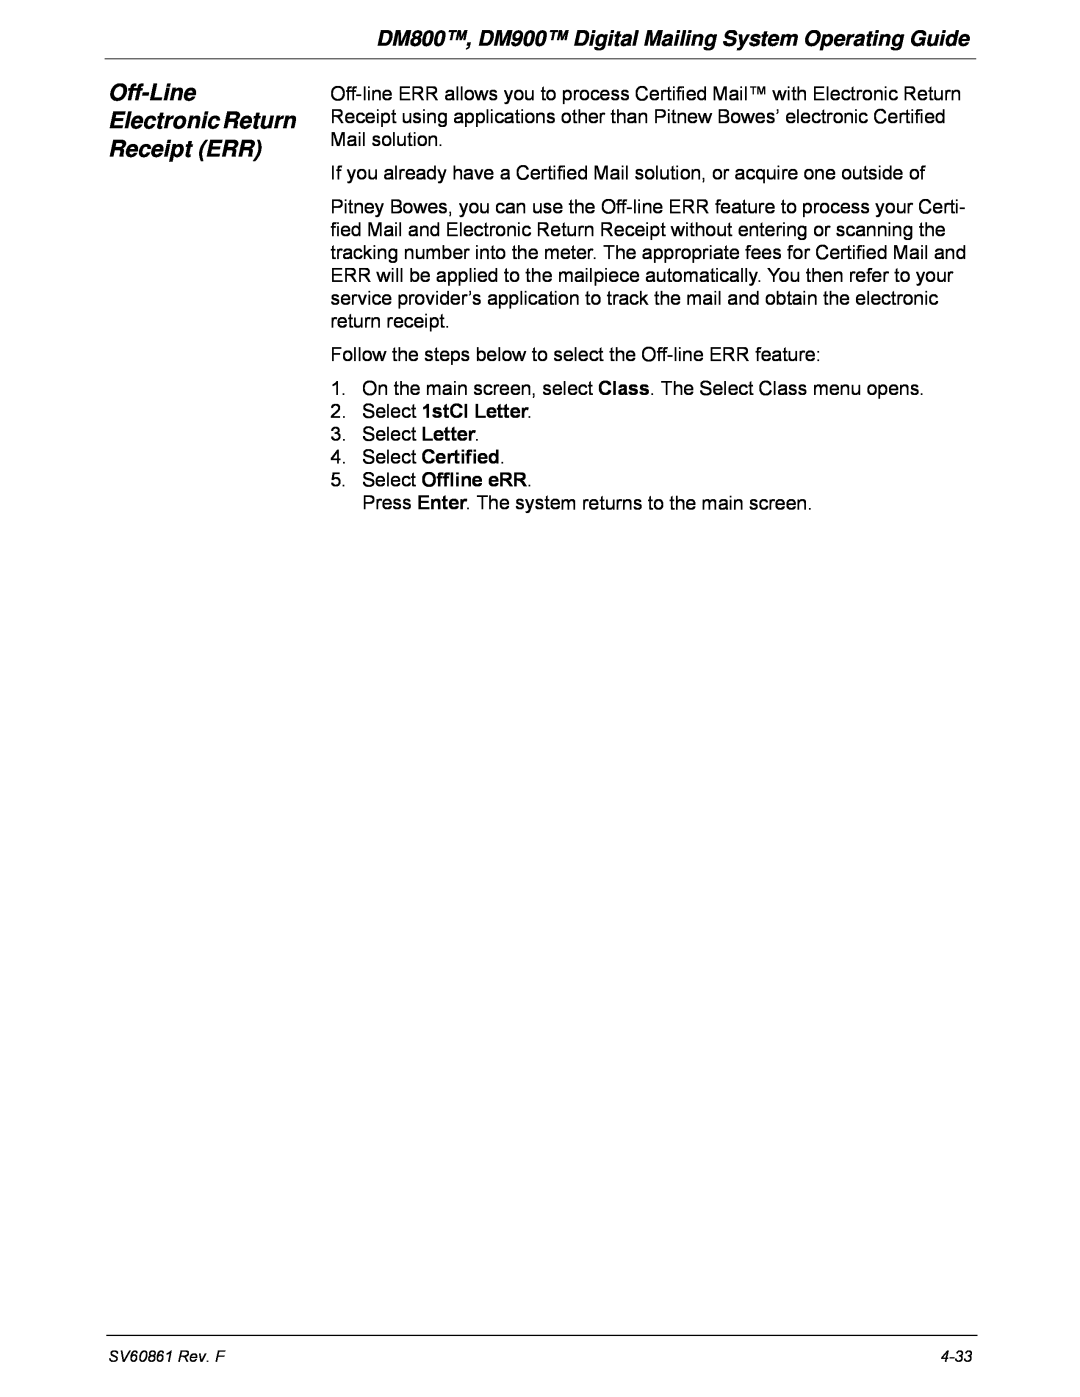 Pitney Bowes manual Off-Line Electronic Return Receipt ERR, DM800, DM900 Digital Mailing System Operating Guide 